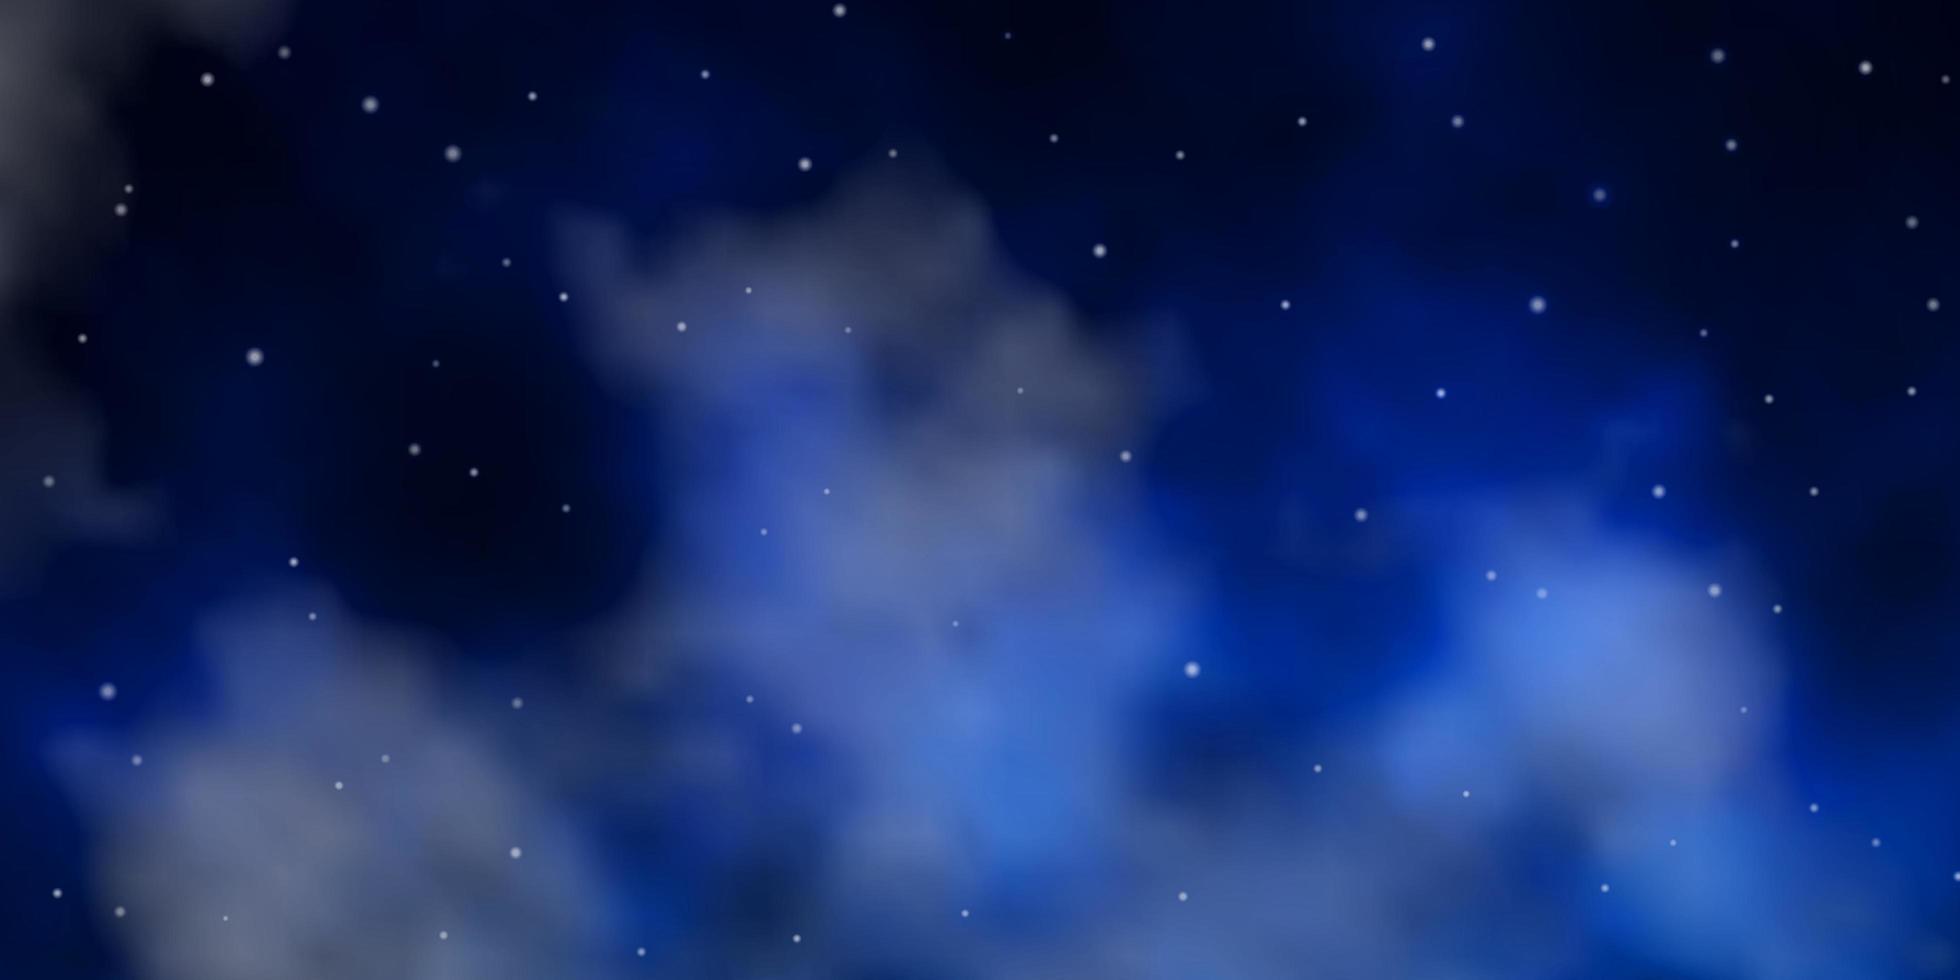 layout de vetor de azul escuro com estrelas brilhantes.